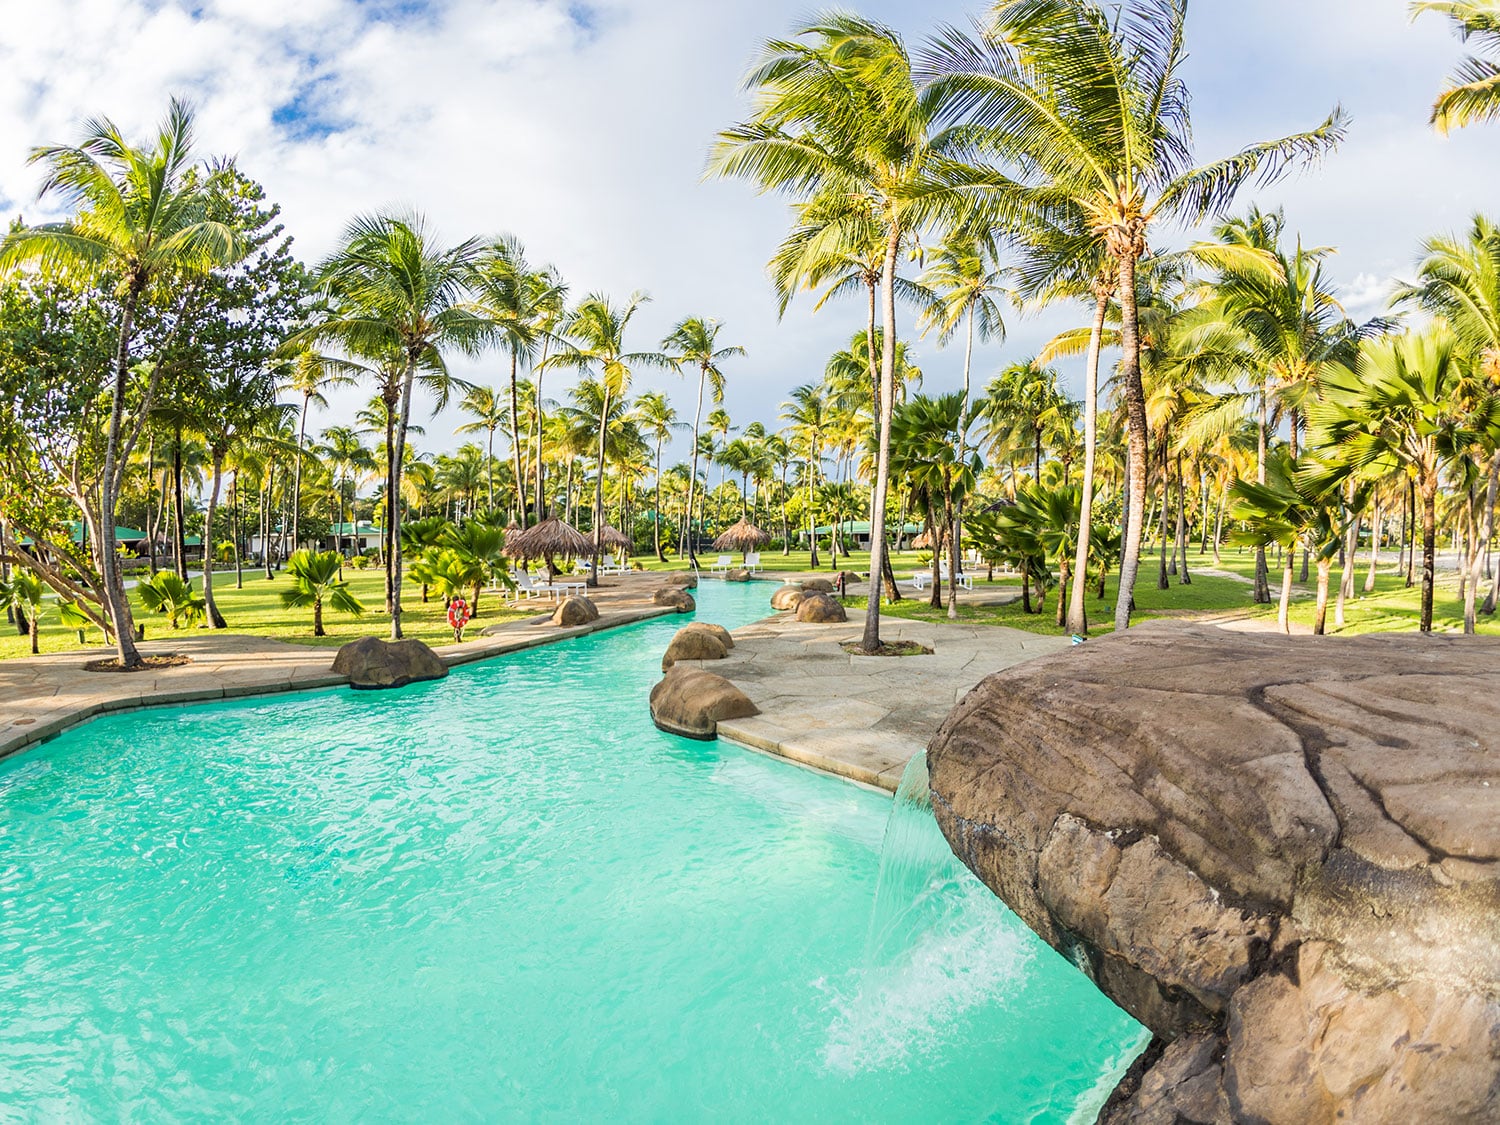 Palm Island Resort pool